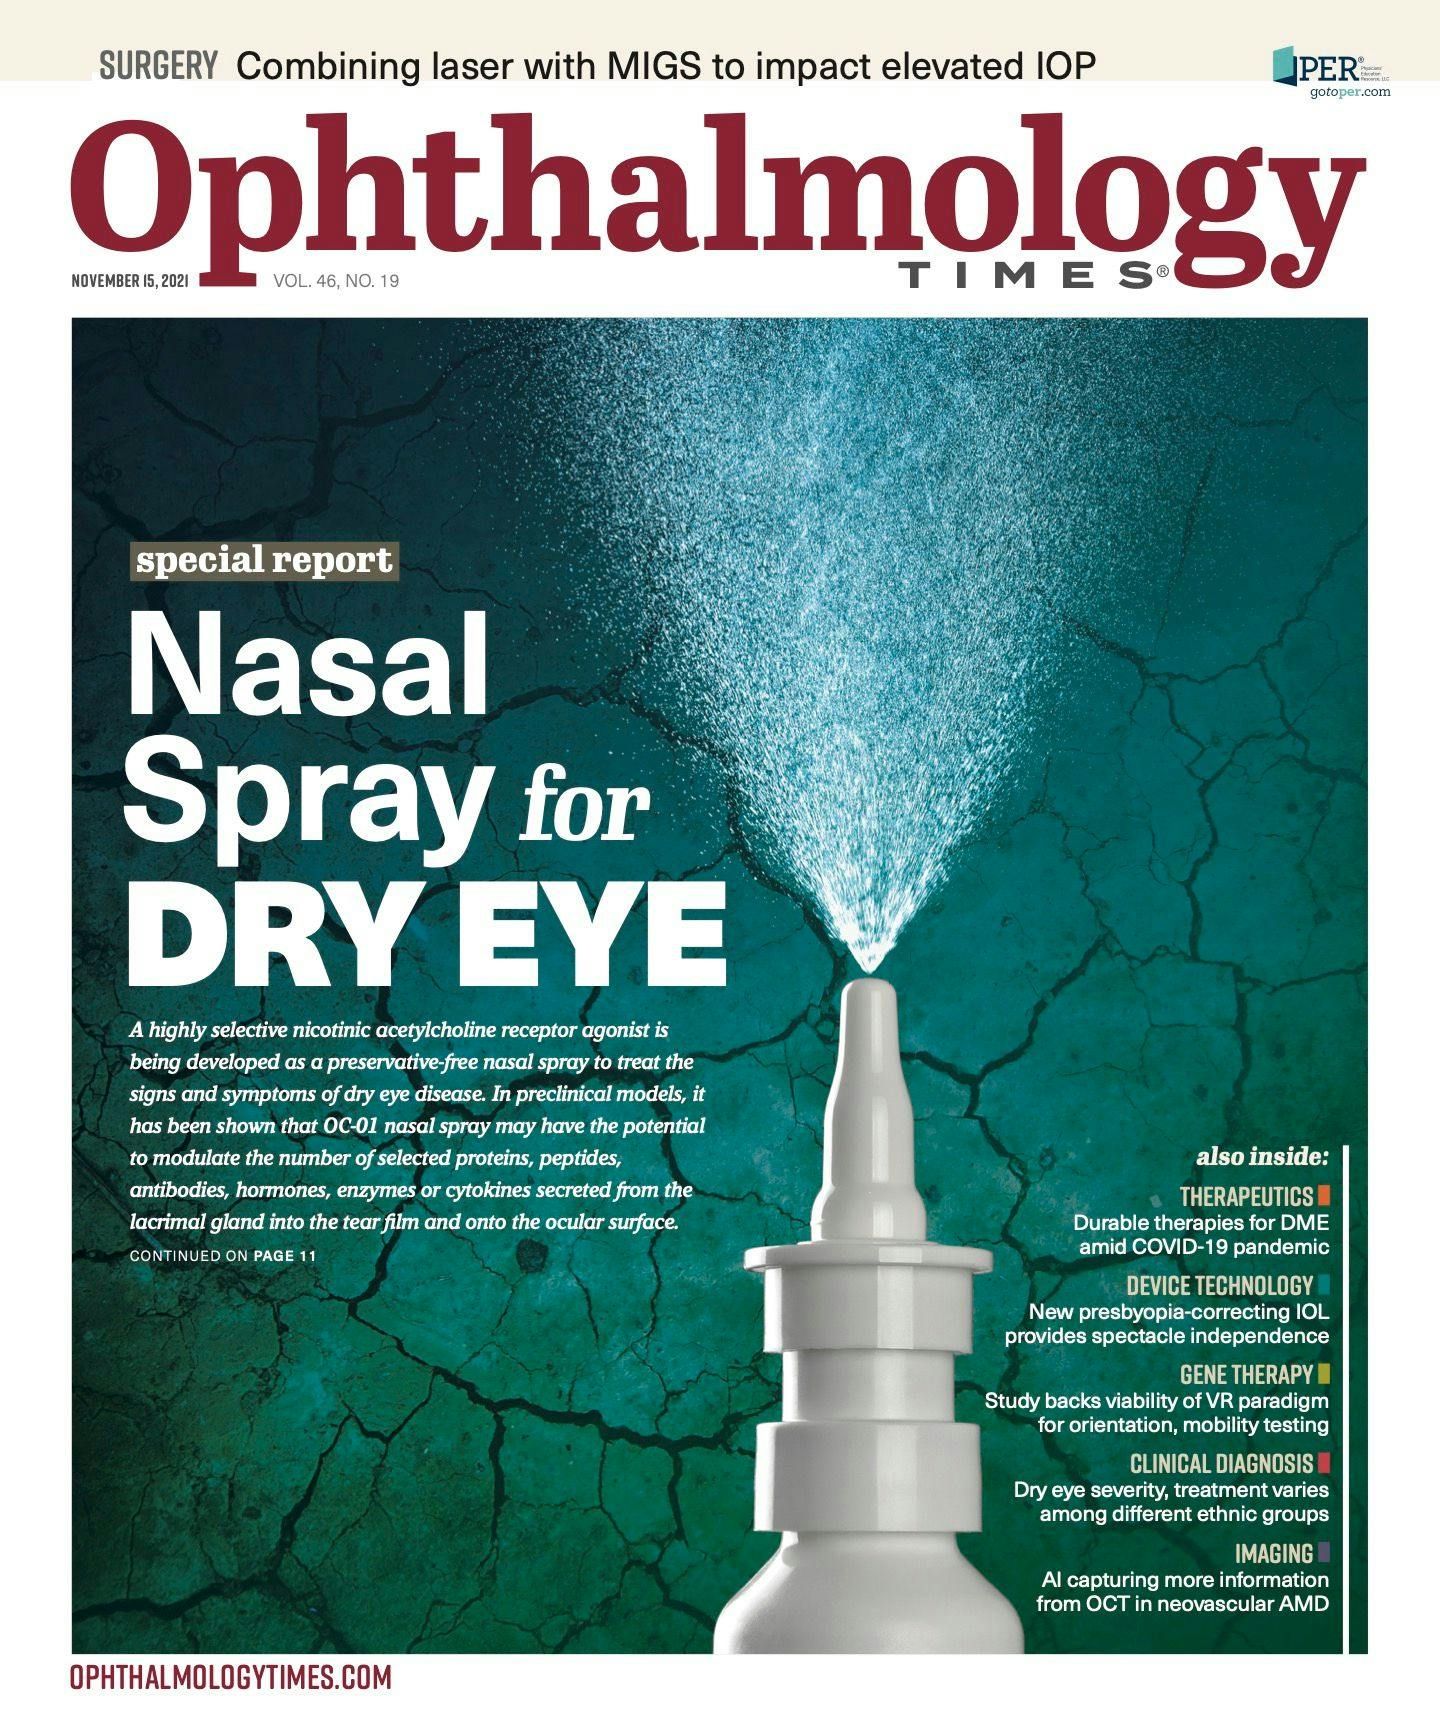 Ophthalmology Times: November 15, 2021